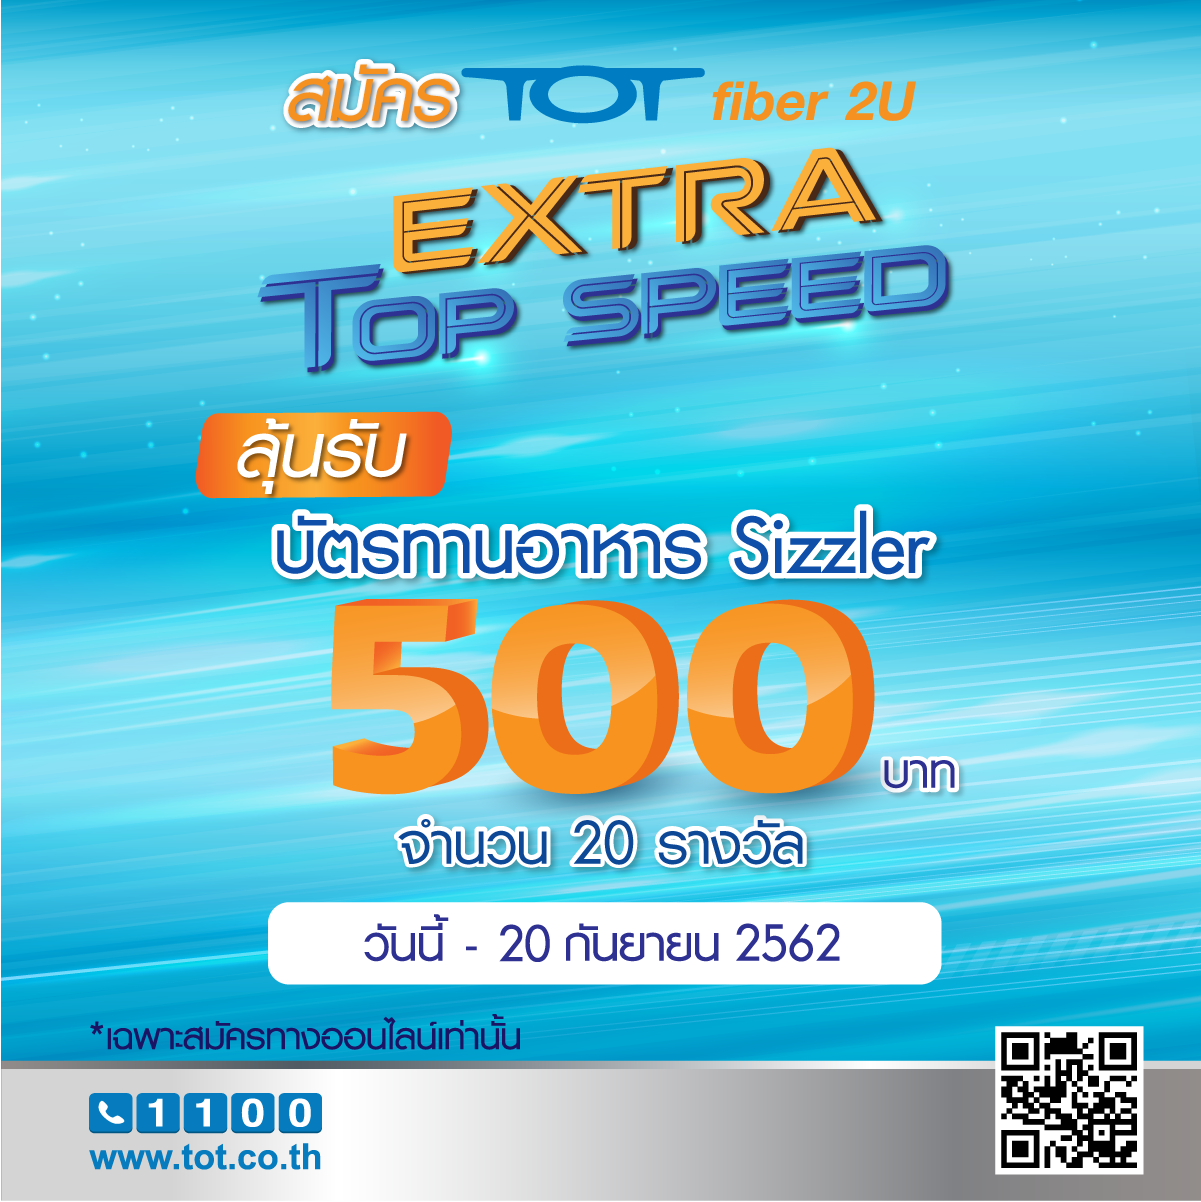 Content_TOT fiber 2U_Extra top speed_01